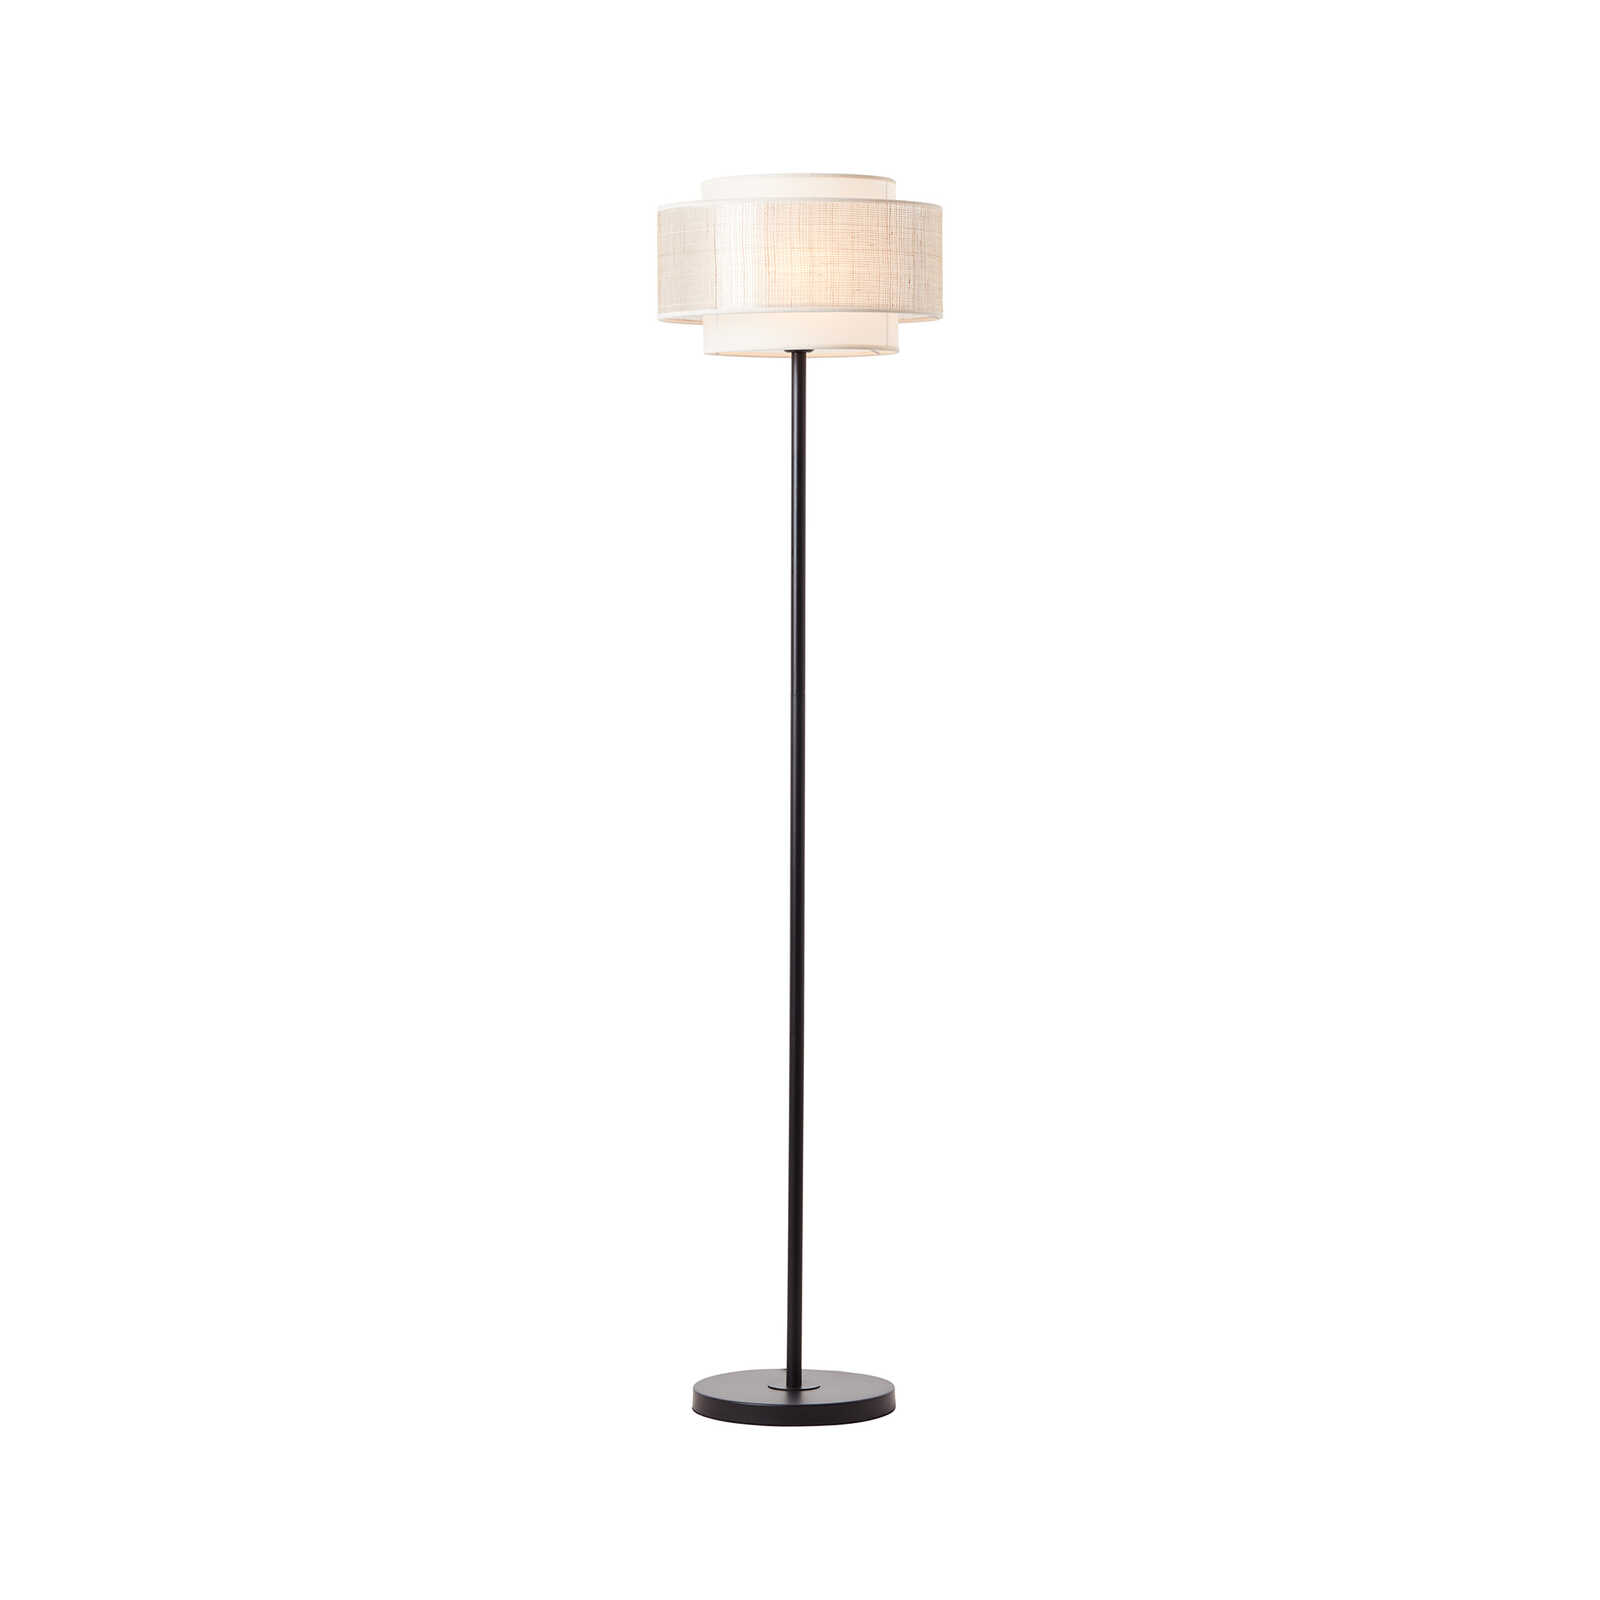 Floor lamp made of textile - Madita 2 - Brown
